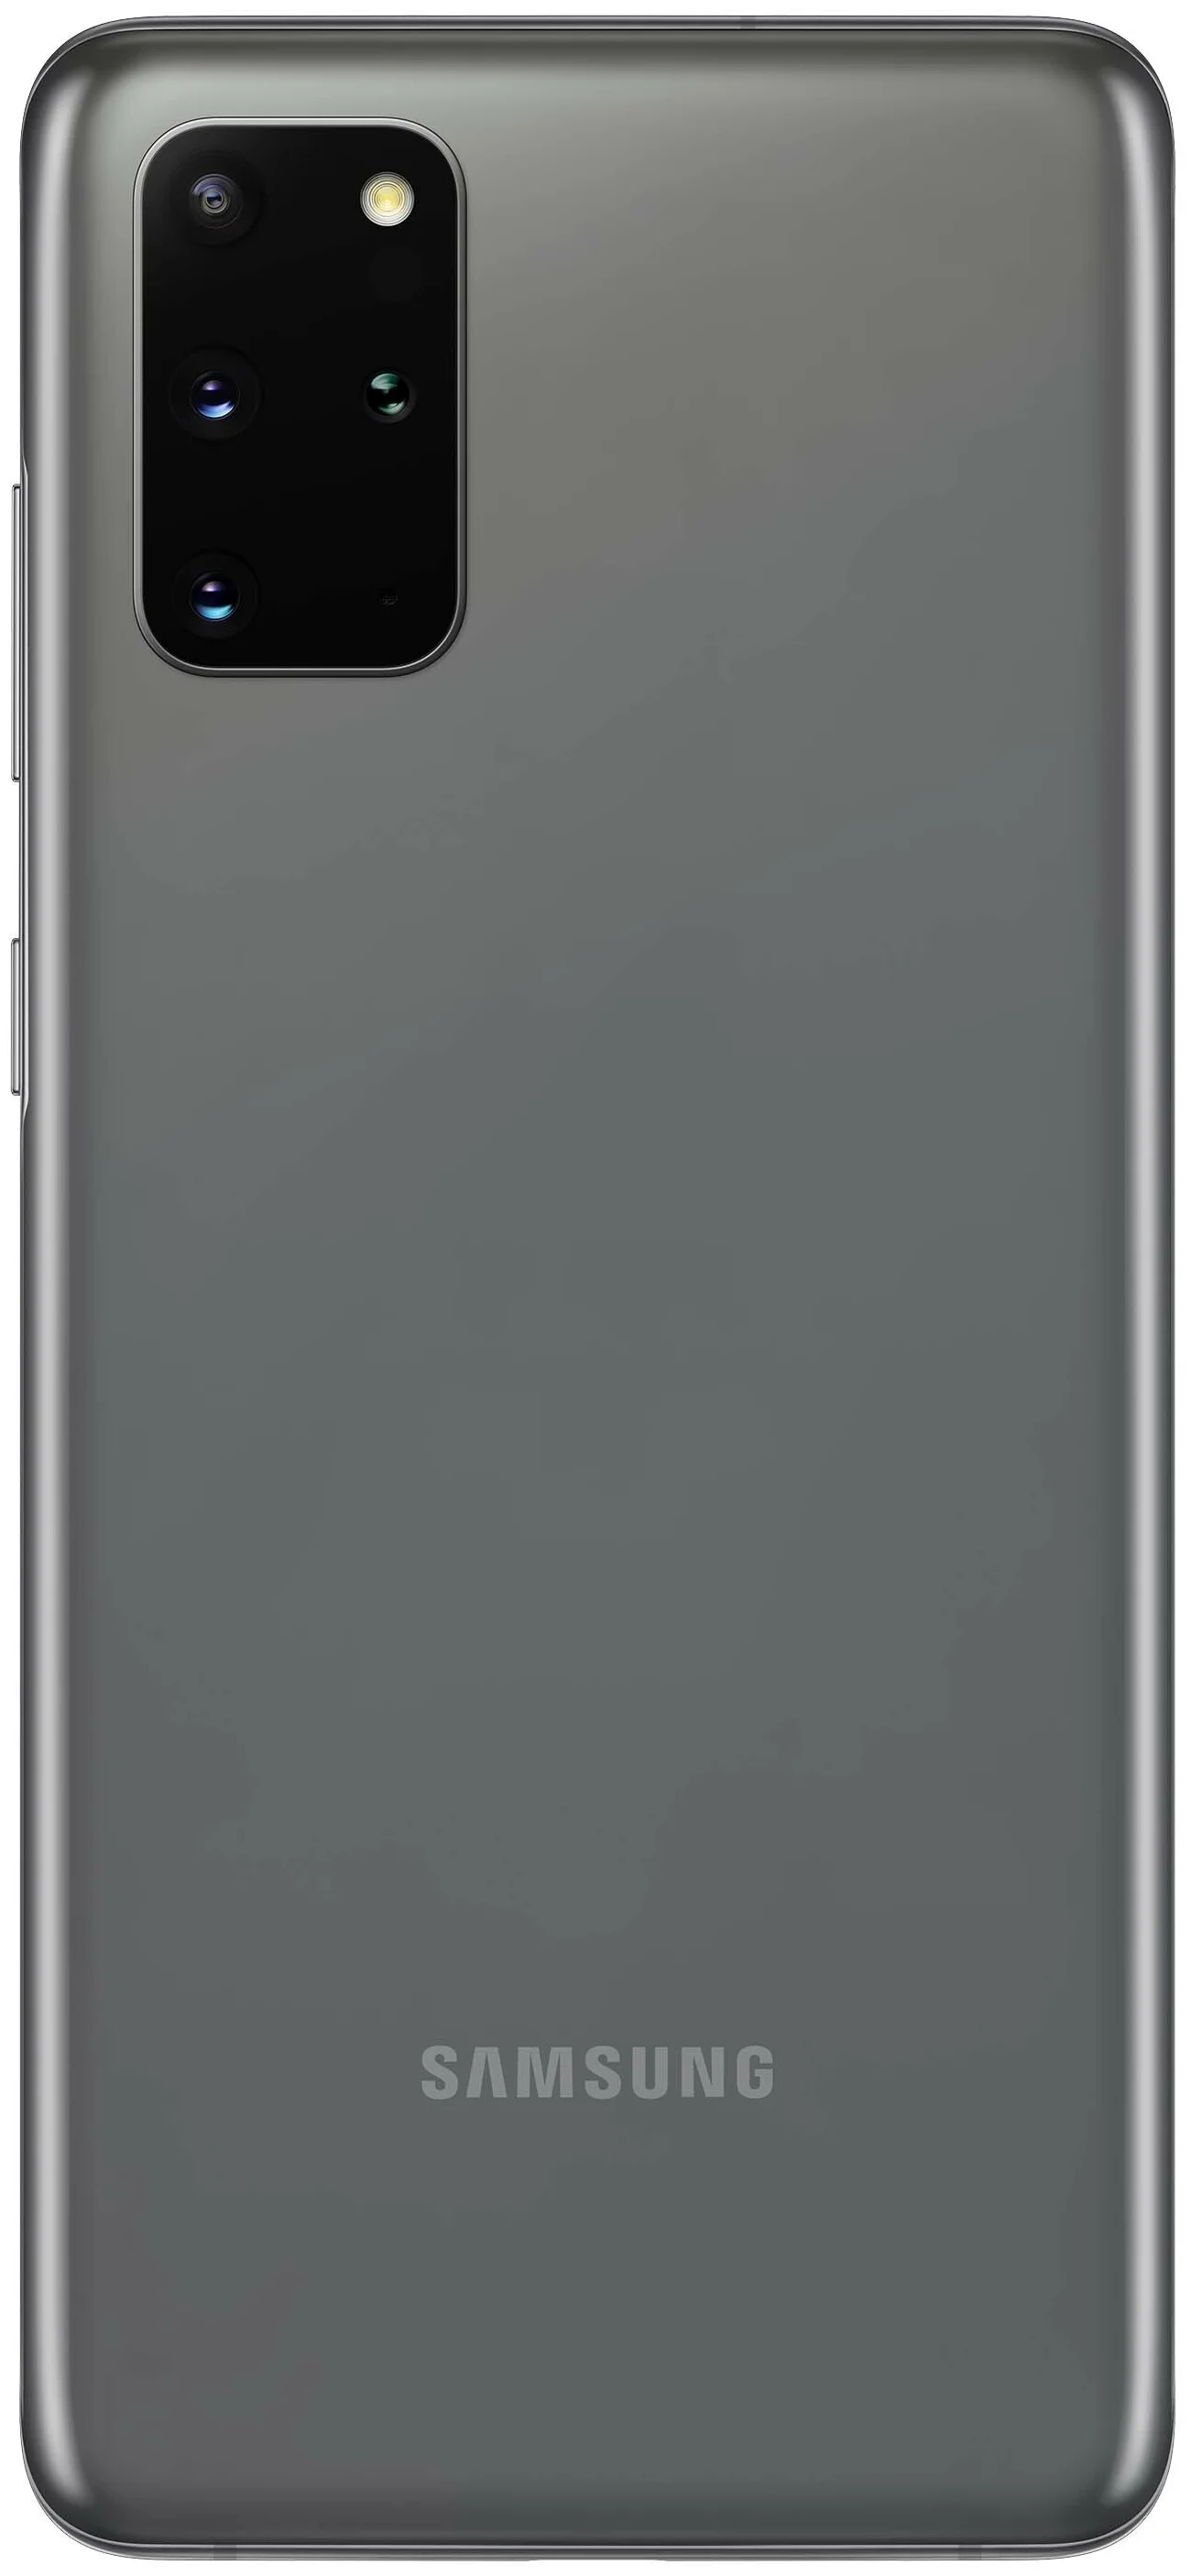 Samsung Galaxy S20+ - интернет: 4G LTE